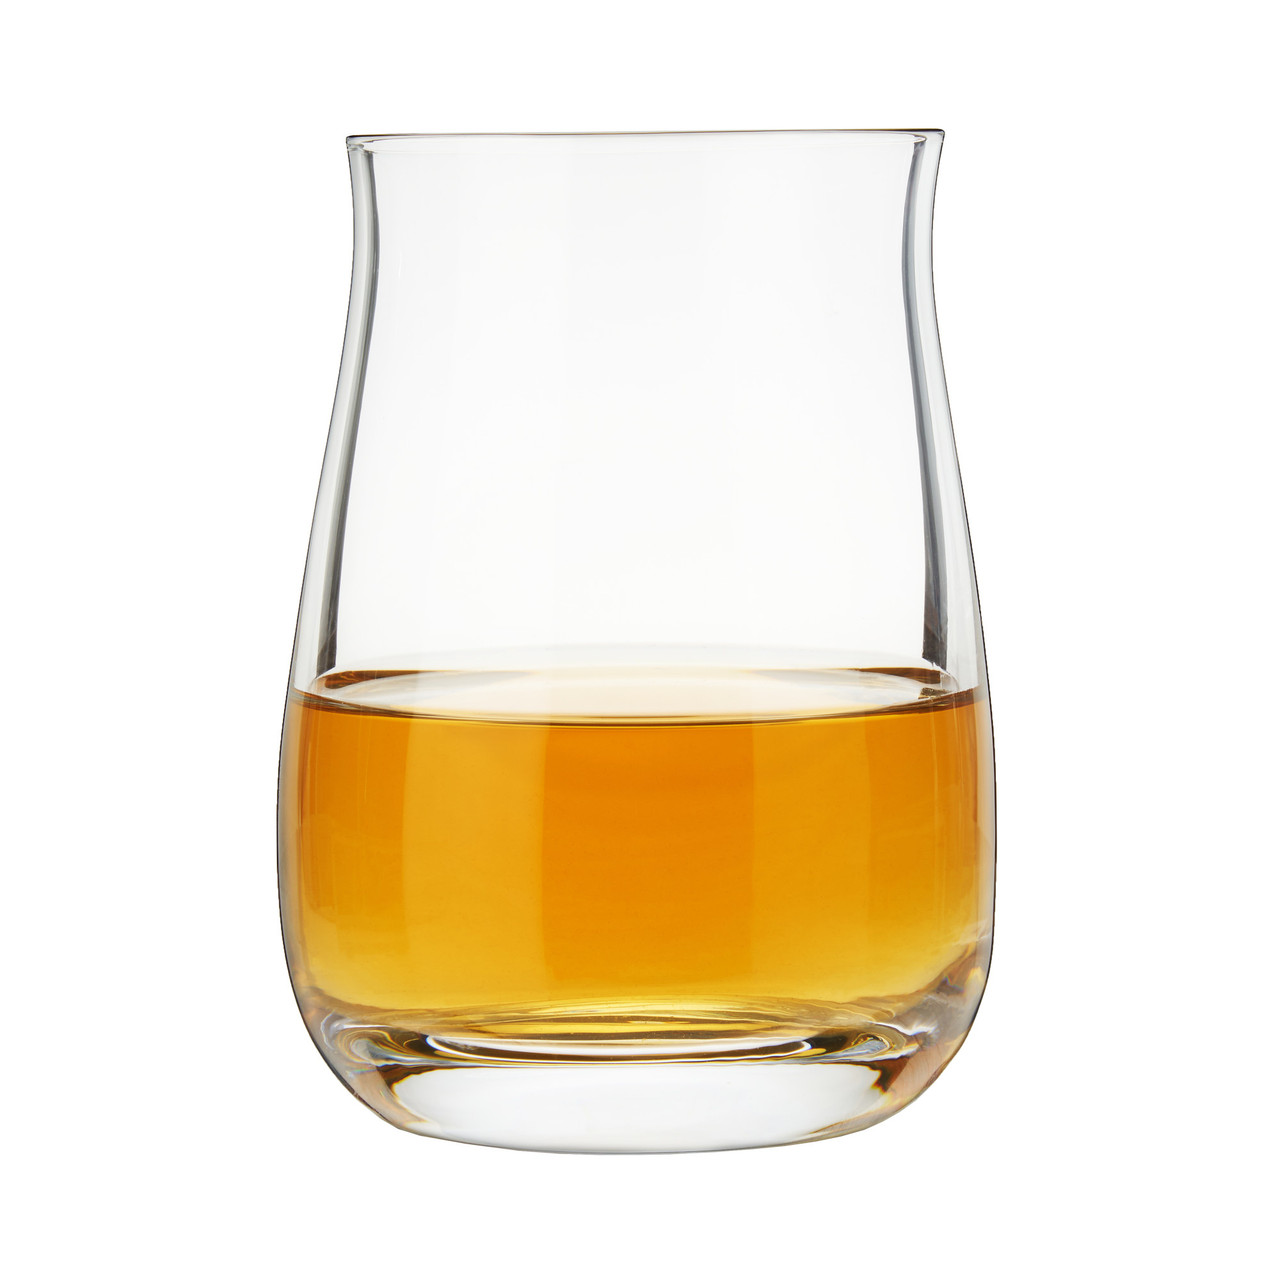 Spiegelau 13.25 oz Single Barrel Bourbon (set of 4)